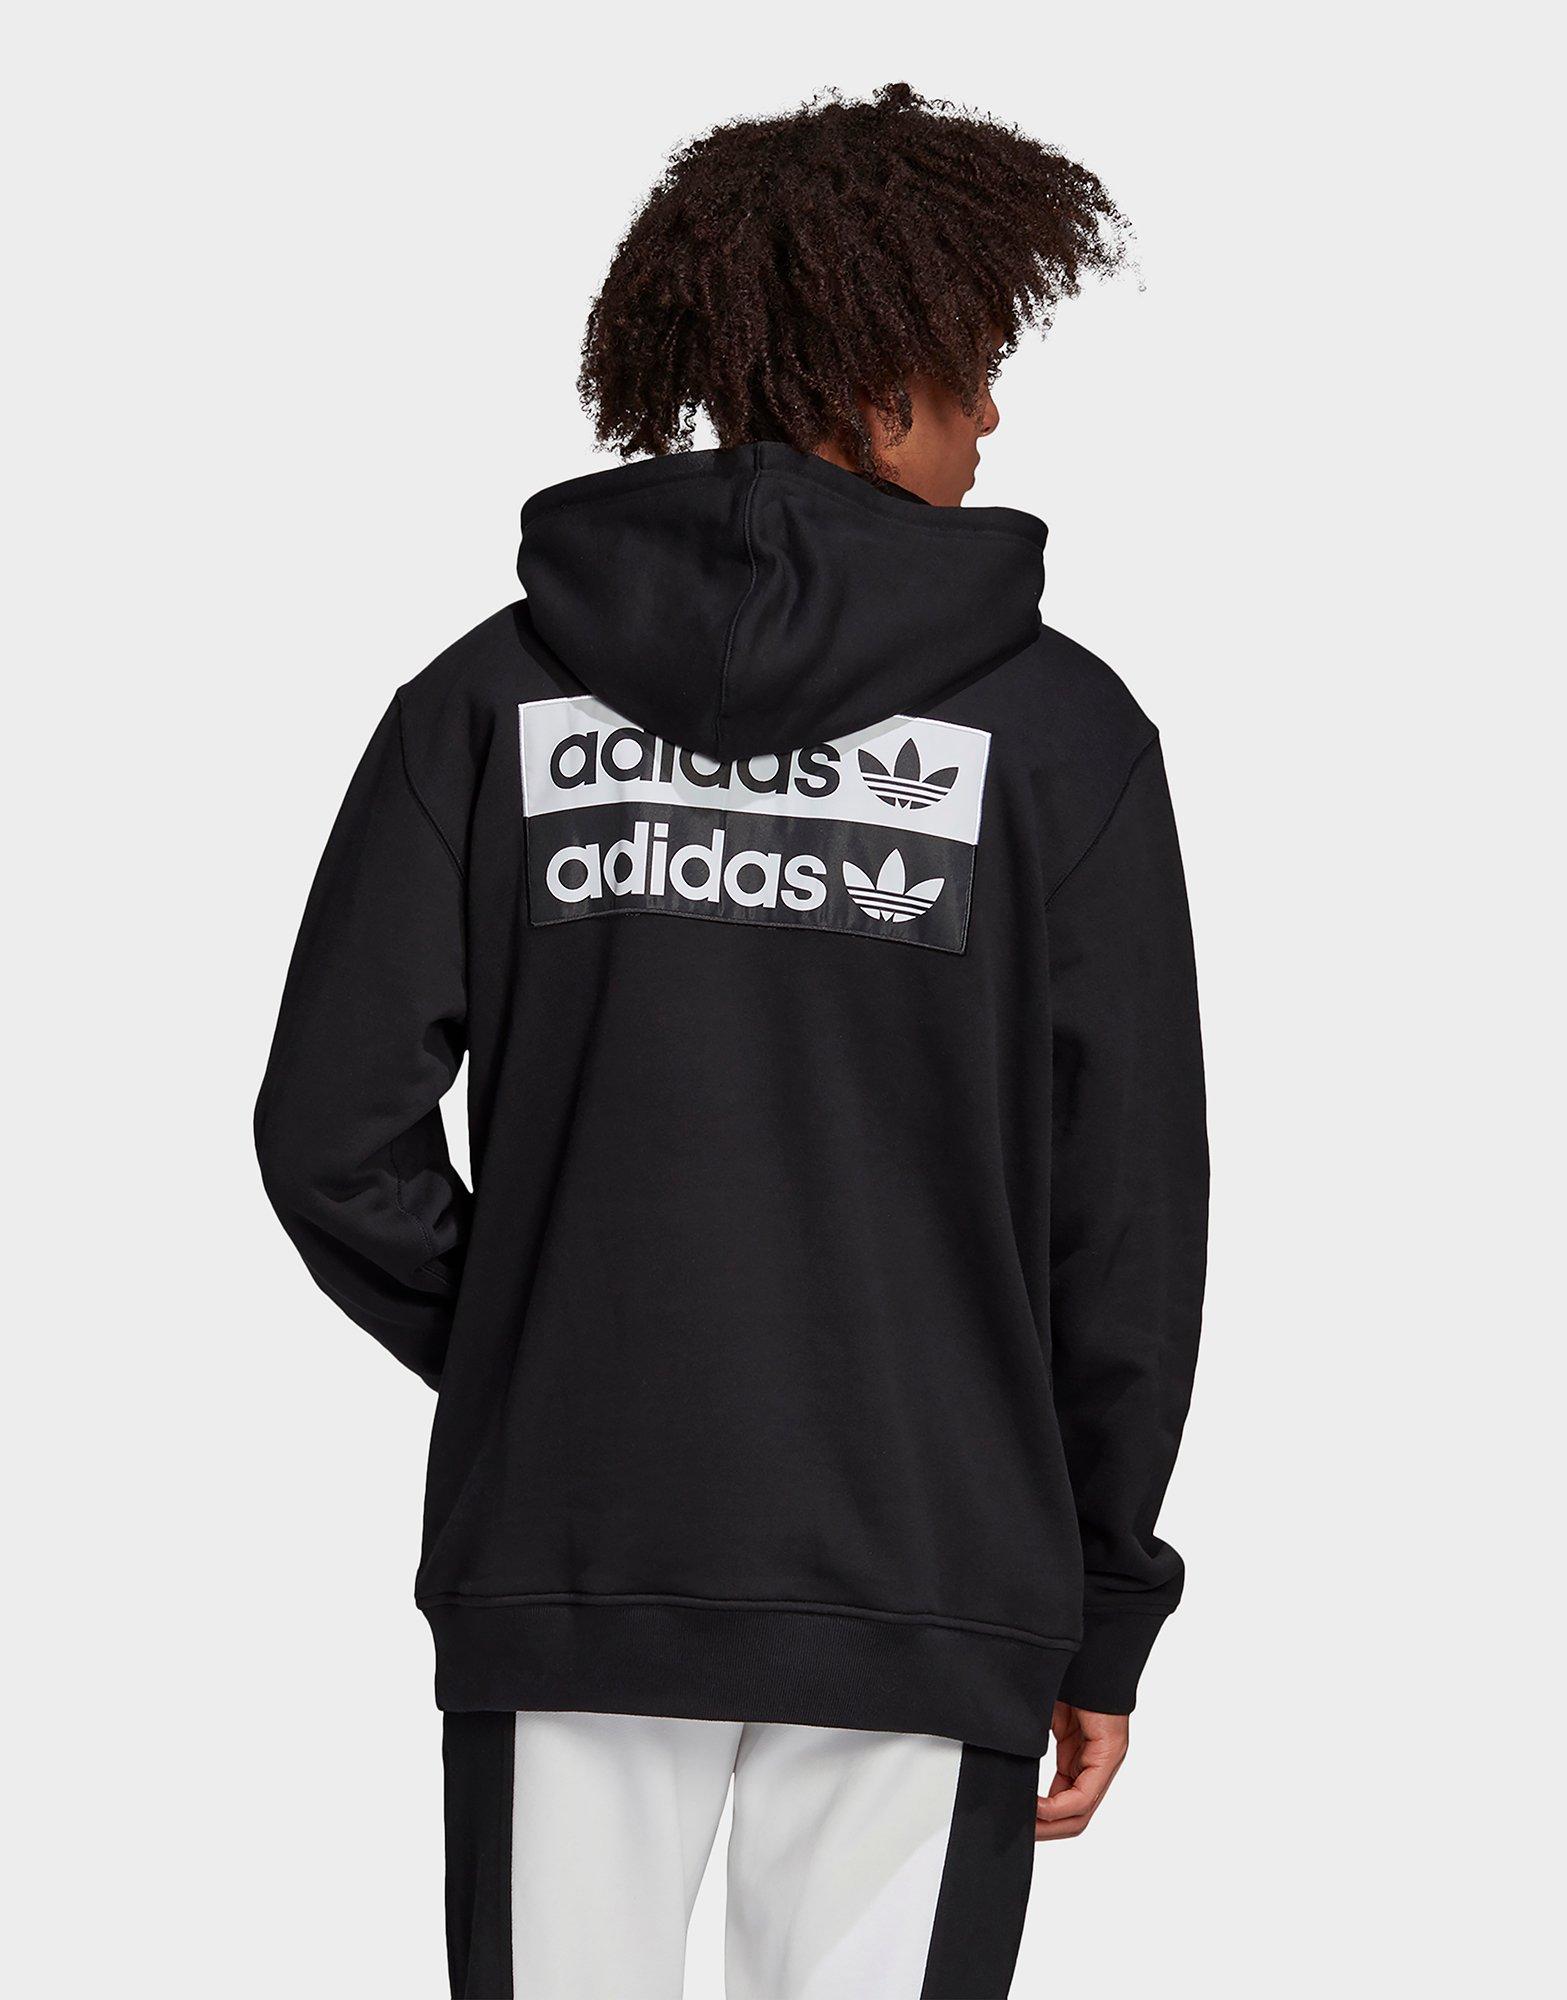 grey adidas hoodie black logo